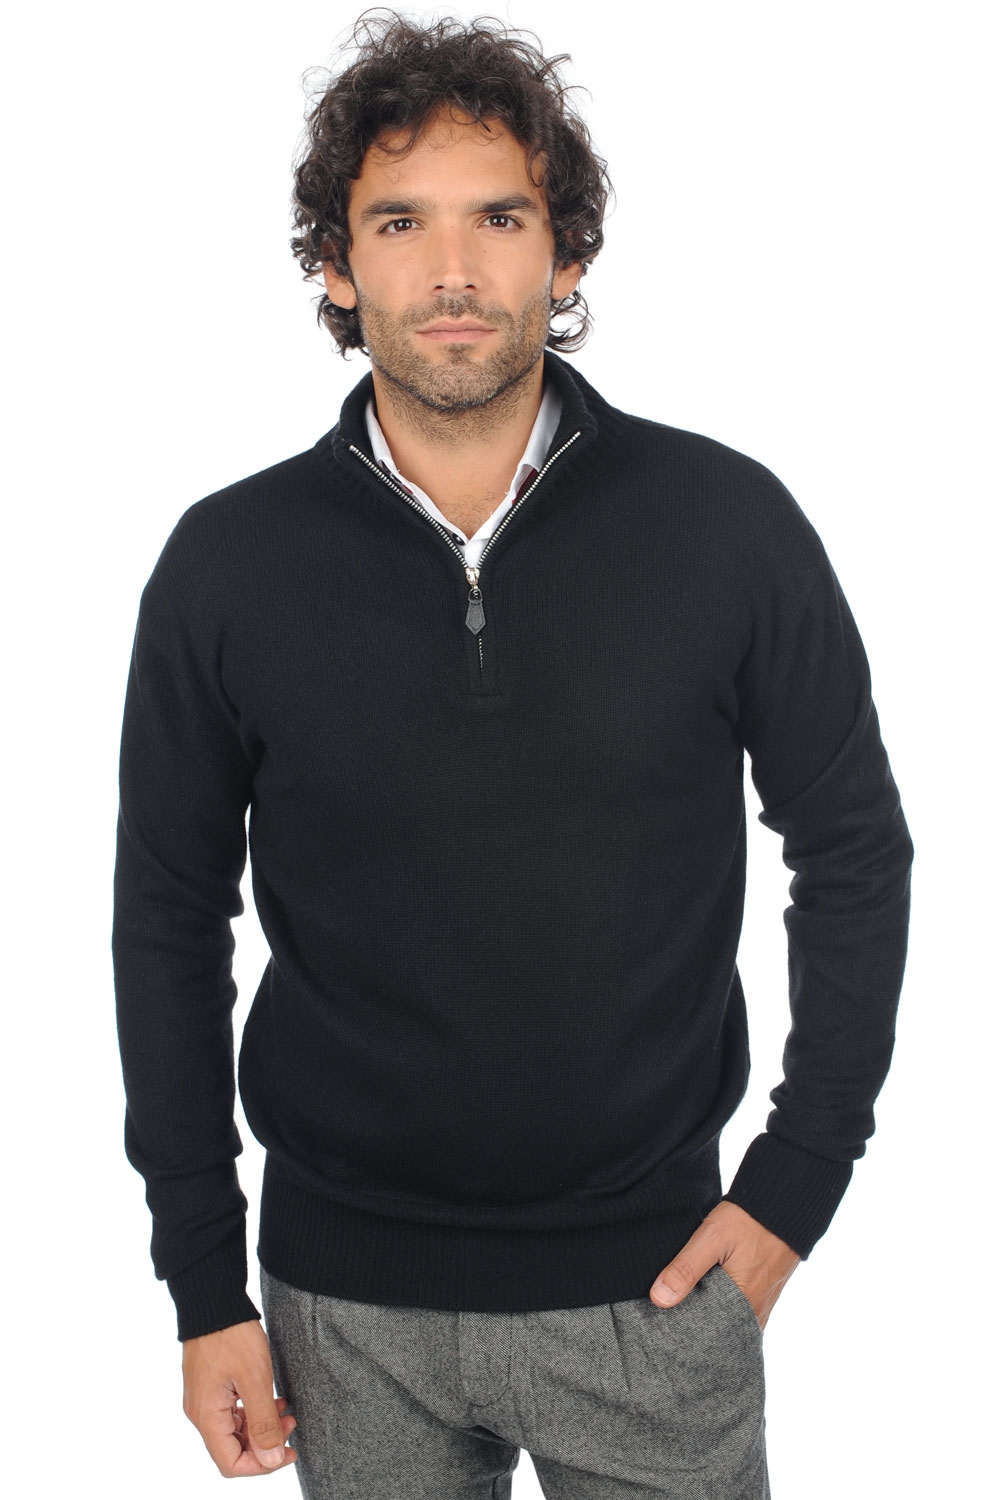 Cashmere men chunky sweater donovan black 4xl